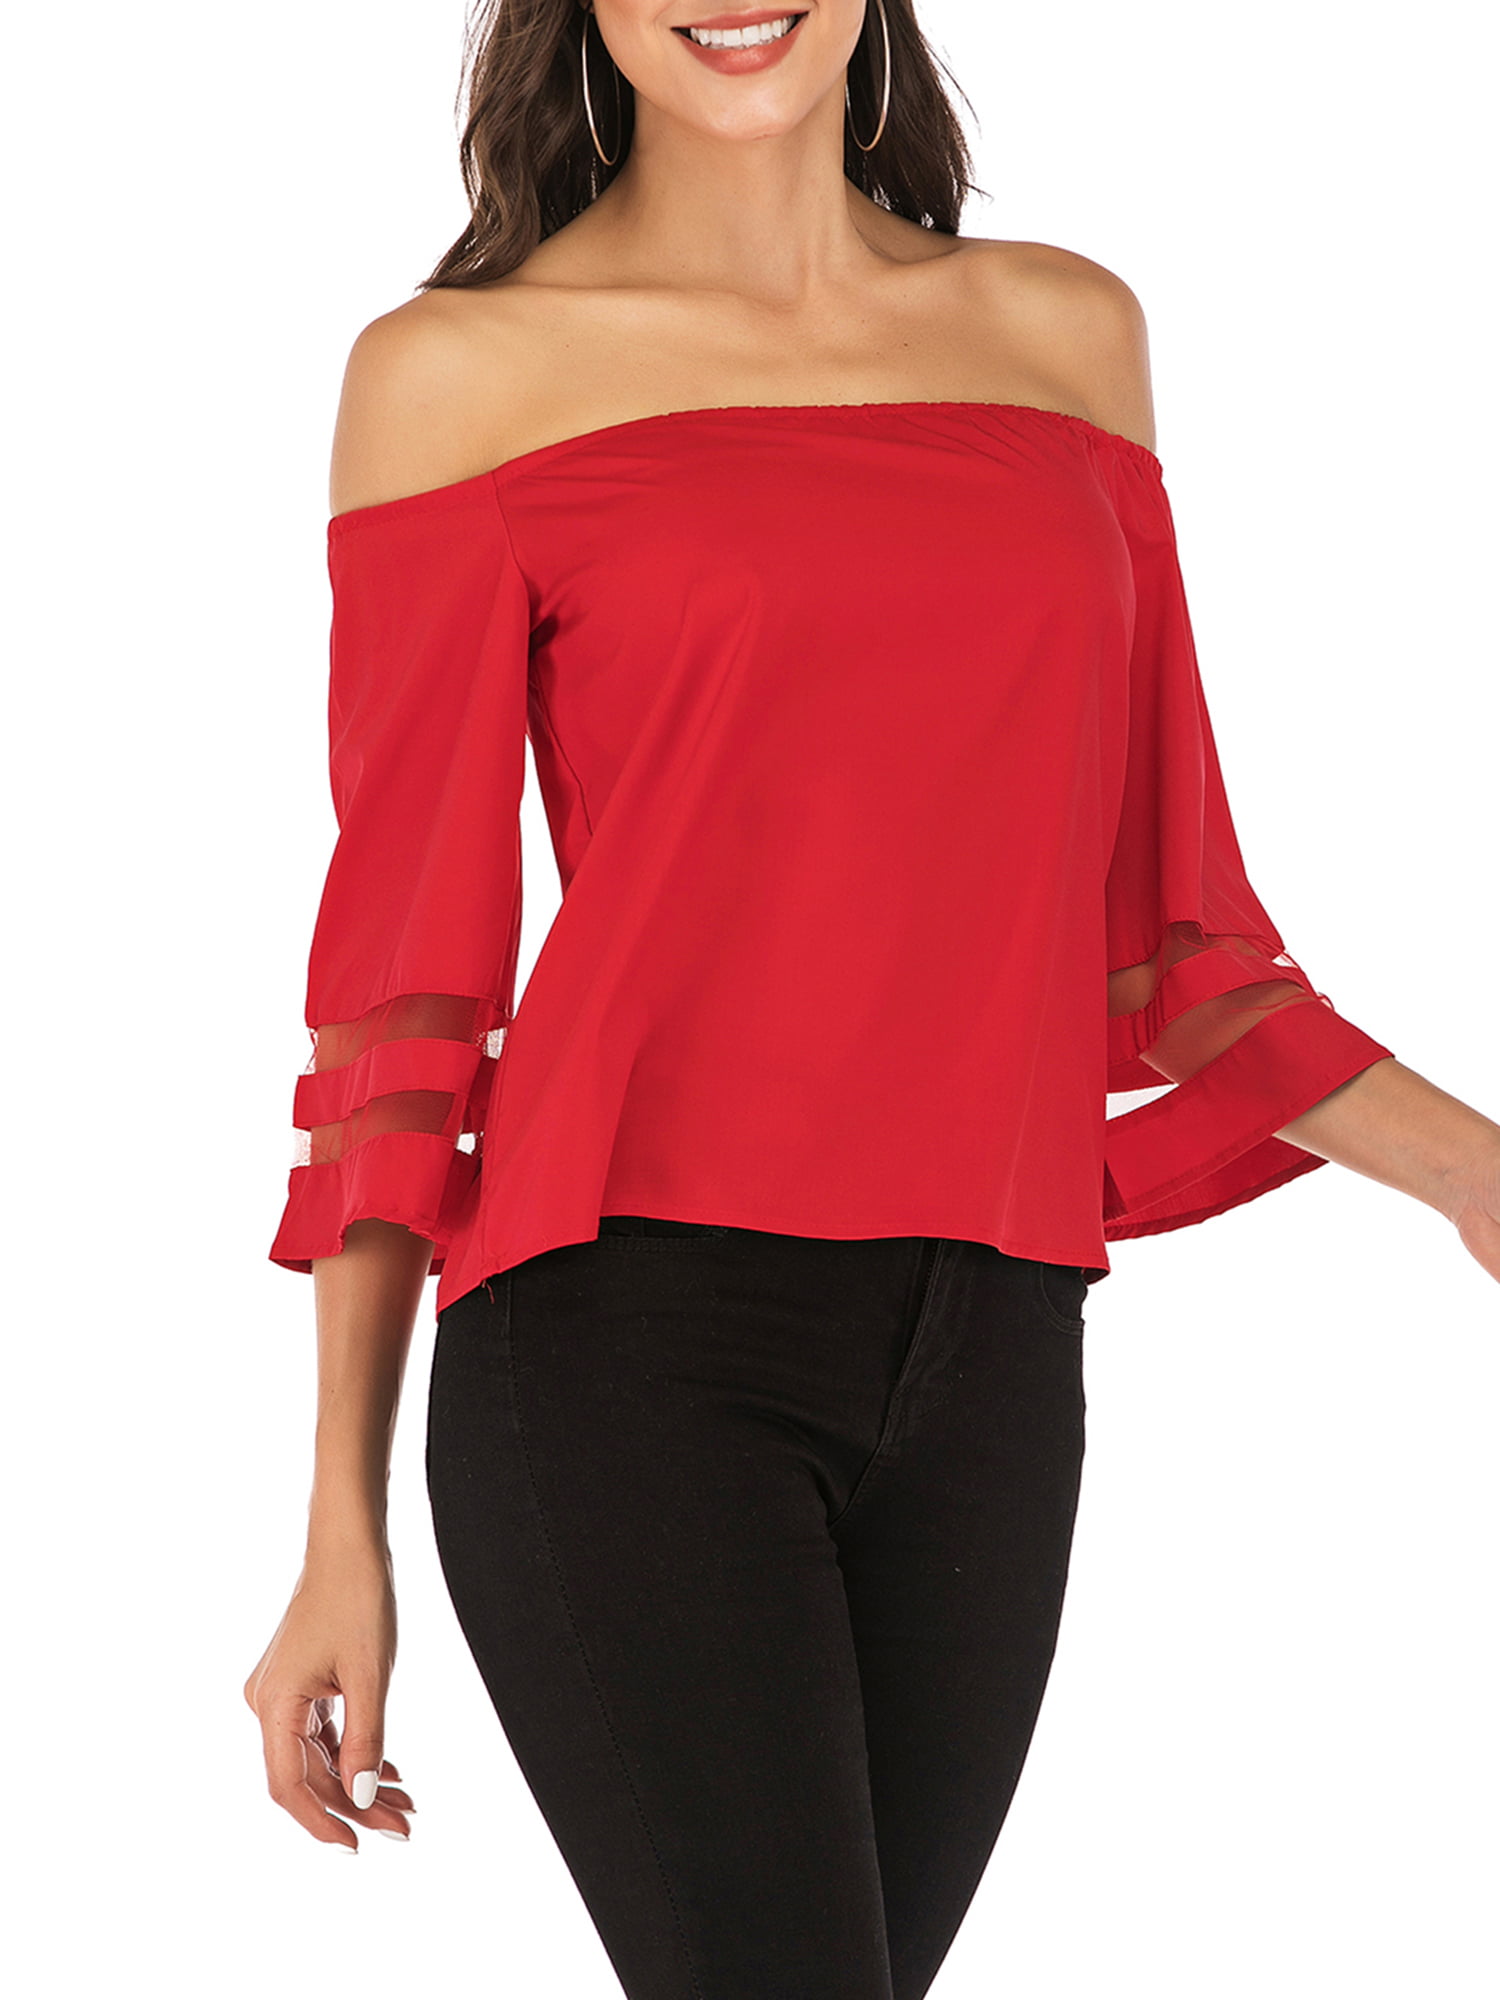 Sayfut Sexy Off Shoulder Tops For Women 3 4 Sleeve Elegant Shirts Cold Shoulder Blouses Red S